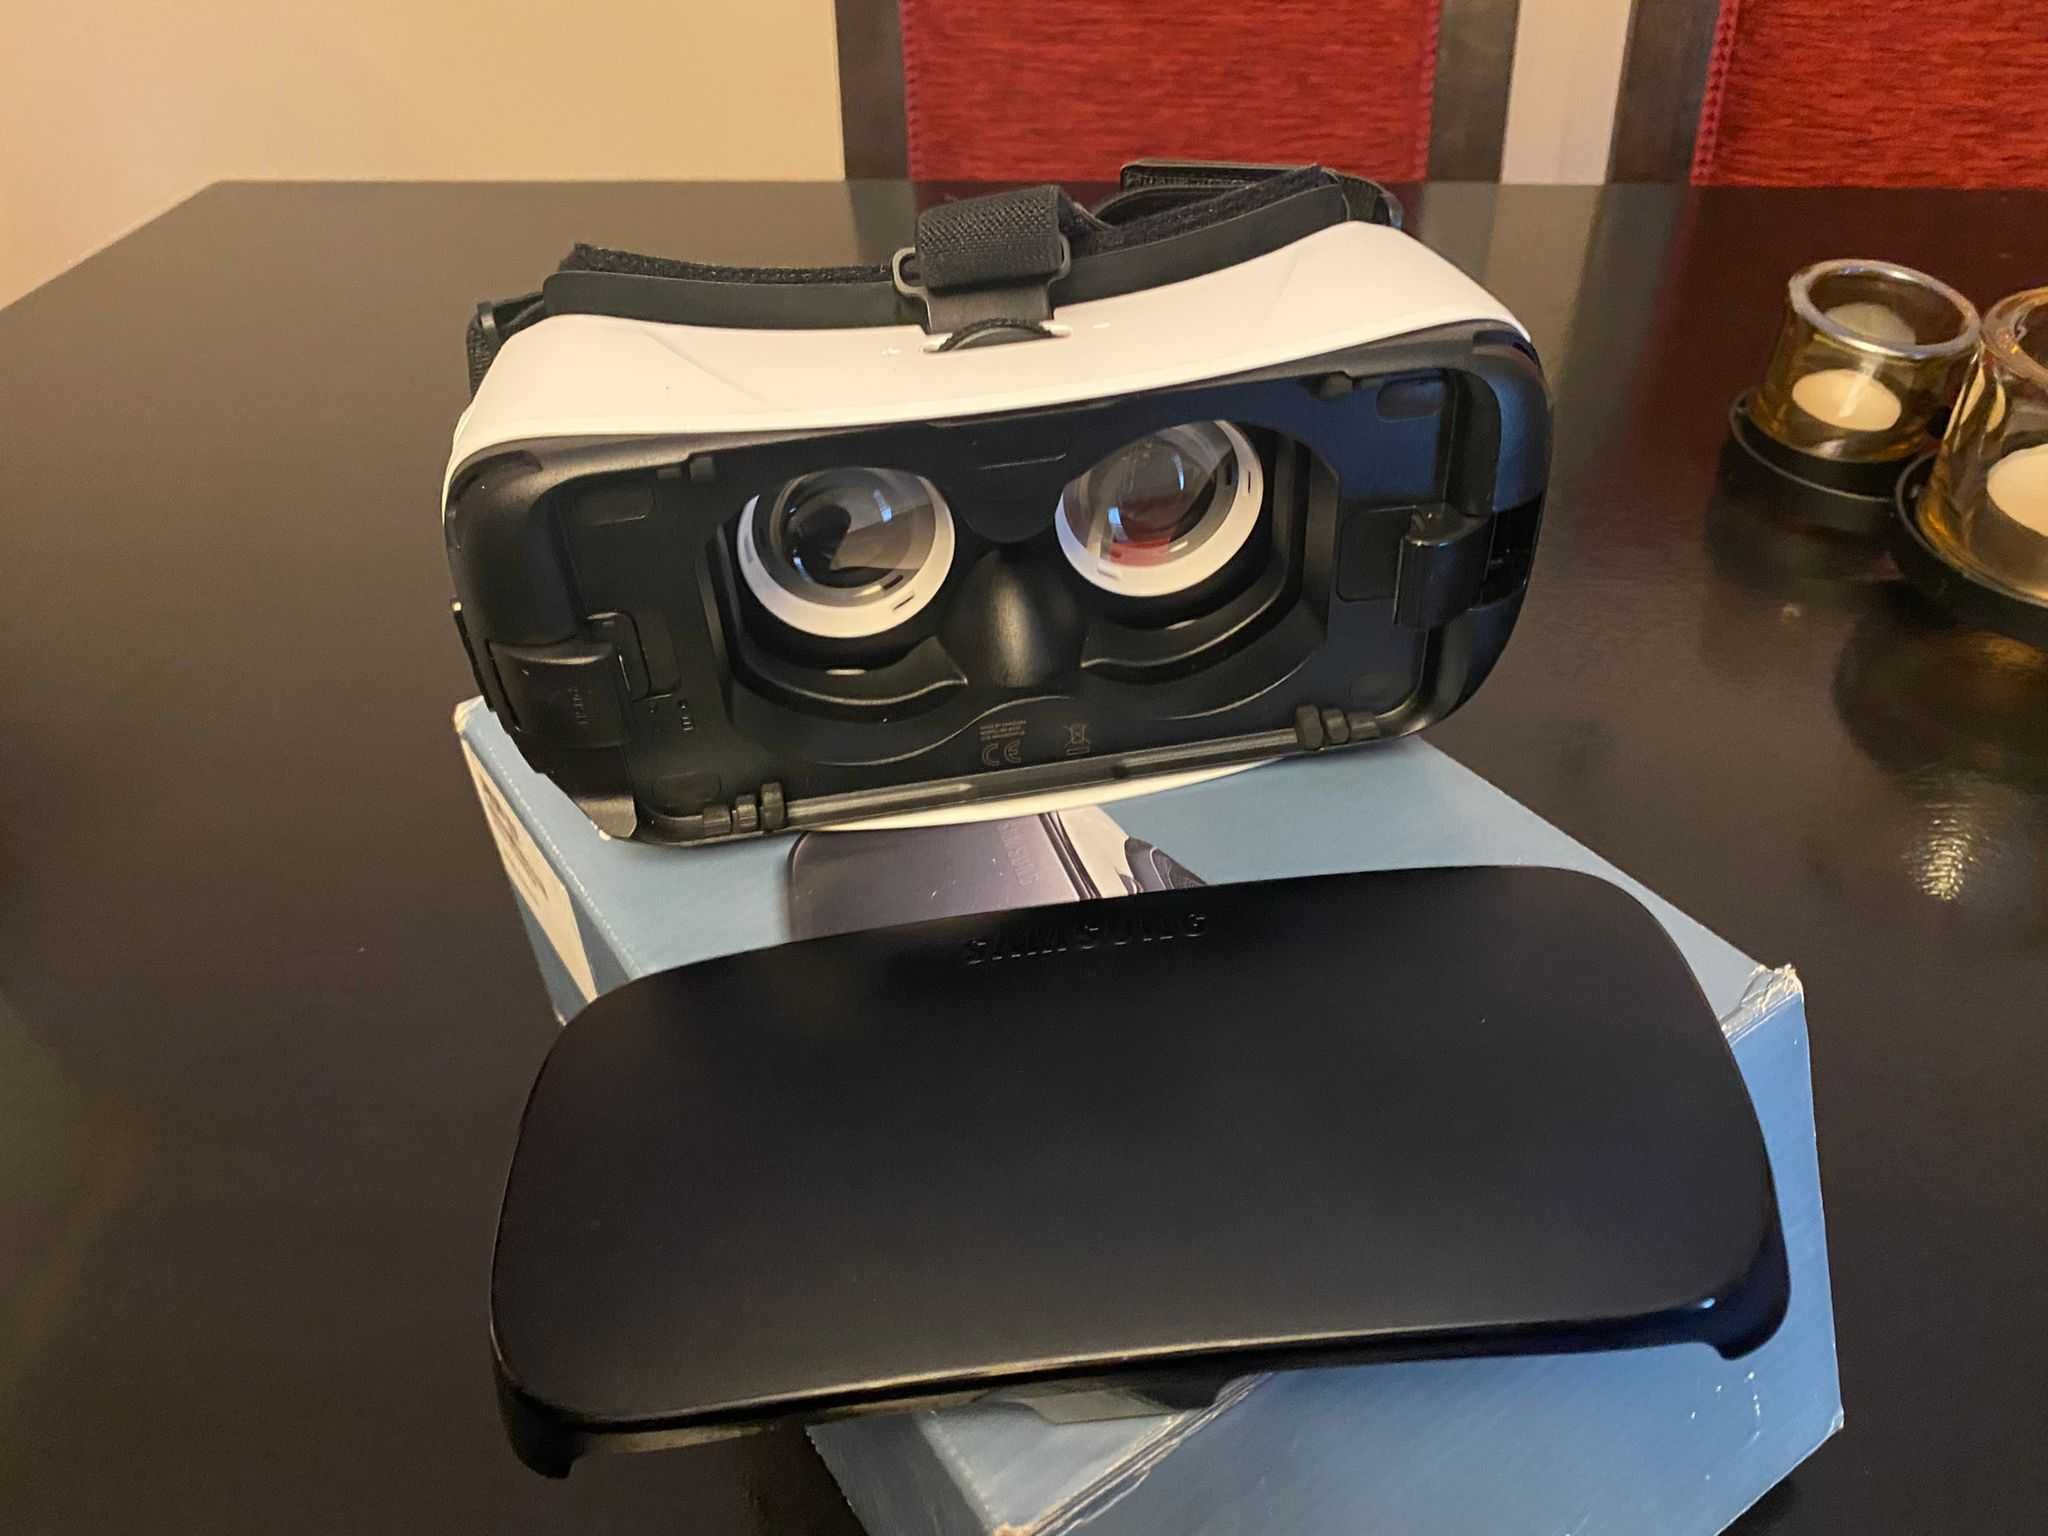 Samsung Gear VR Occulus